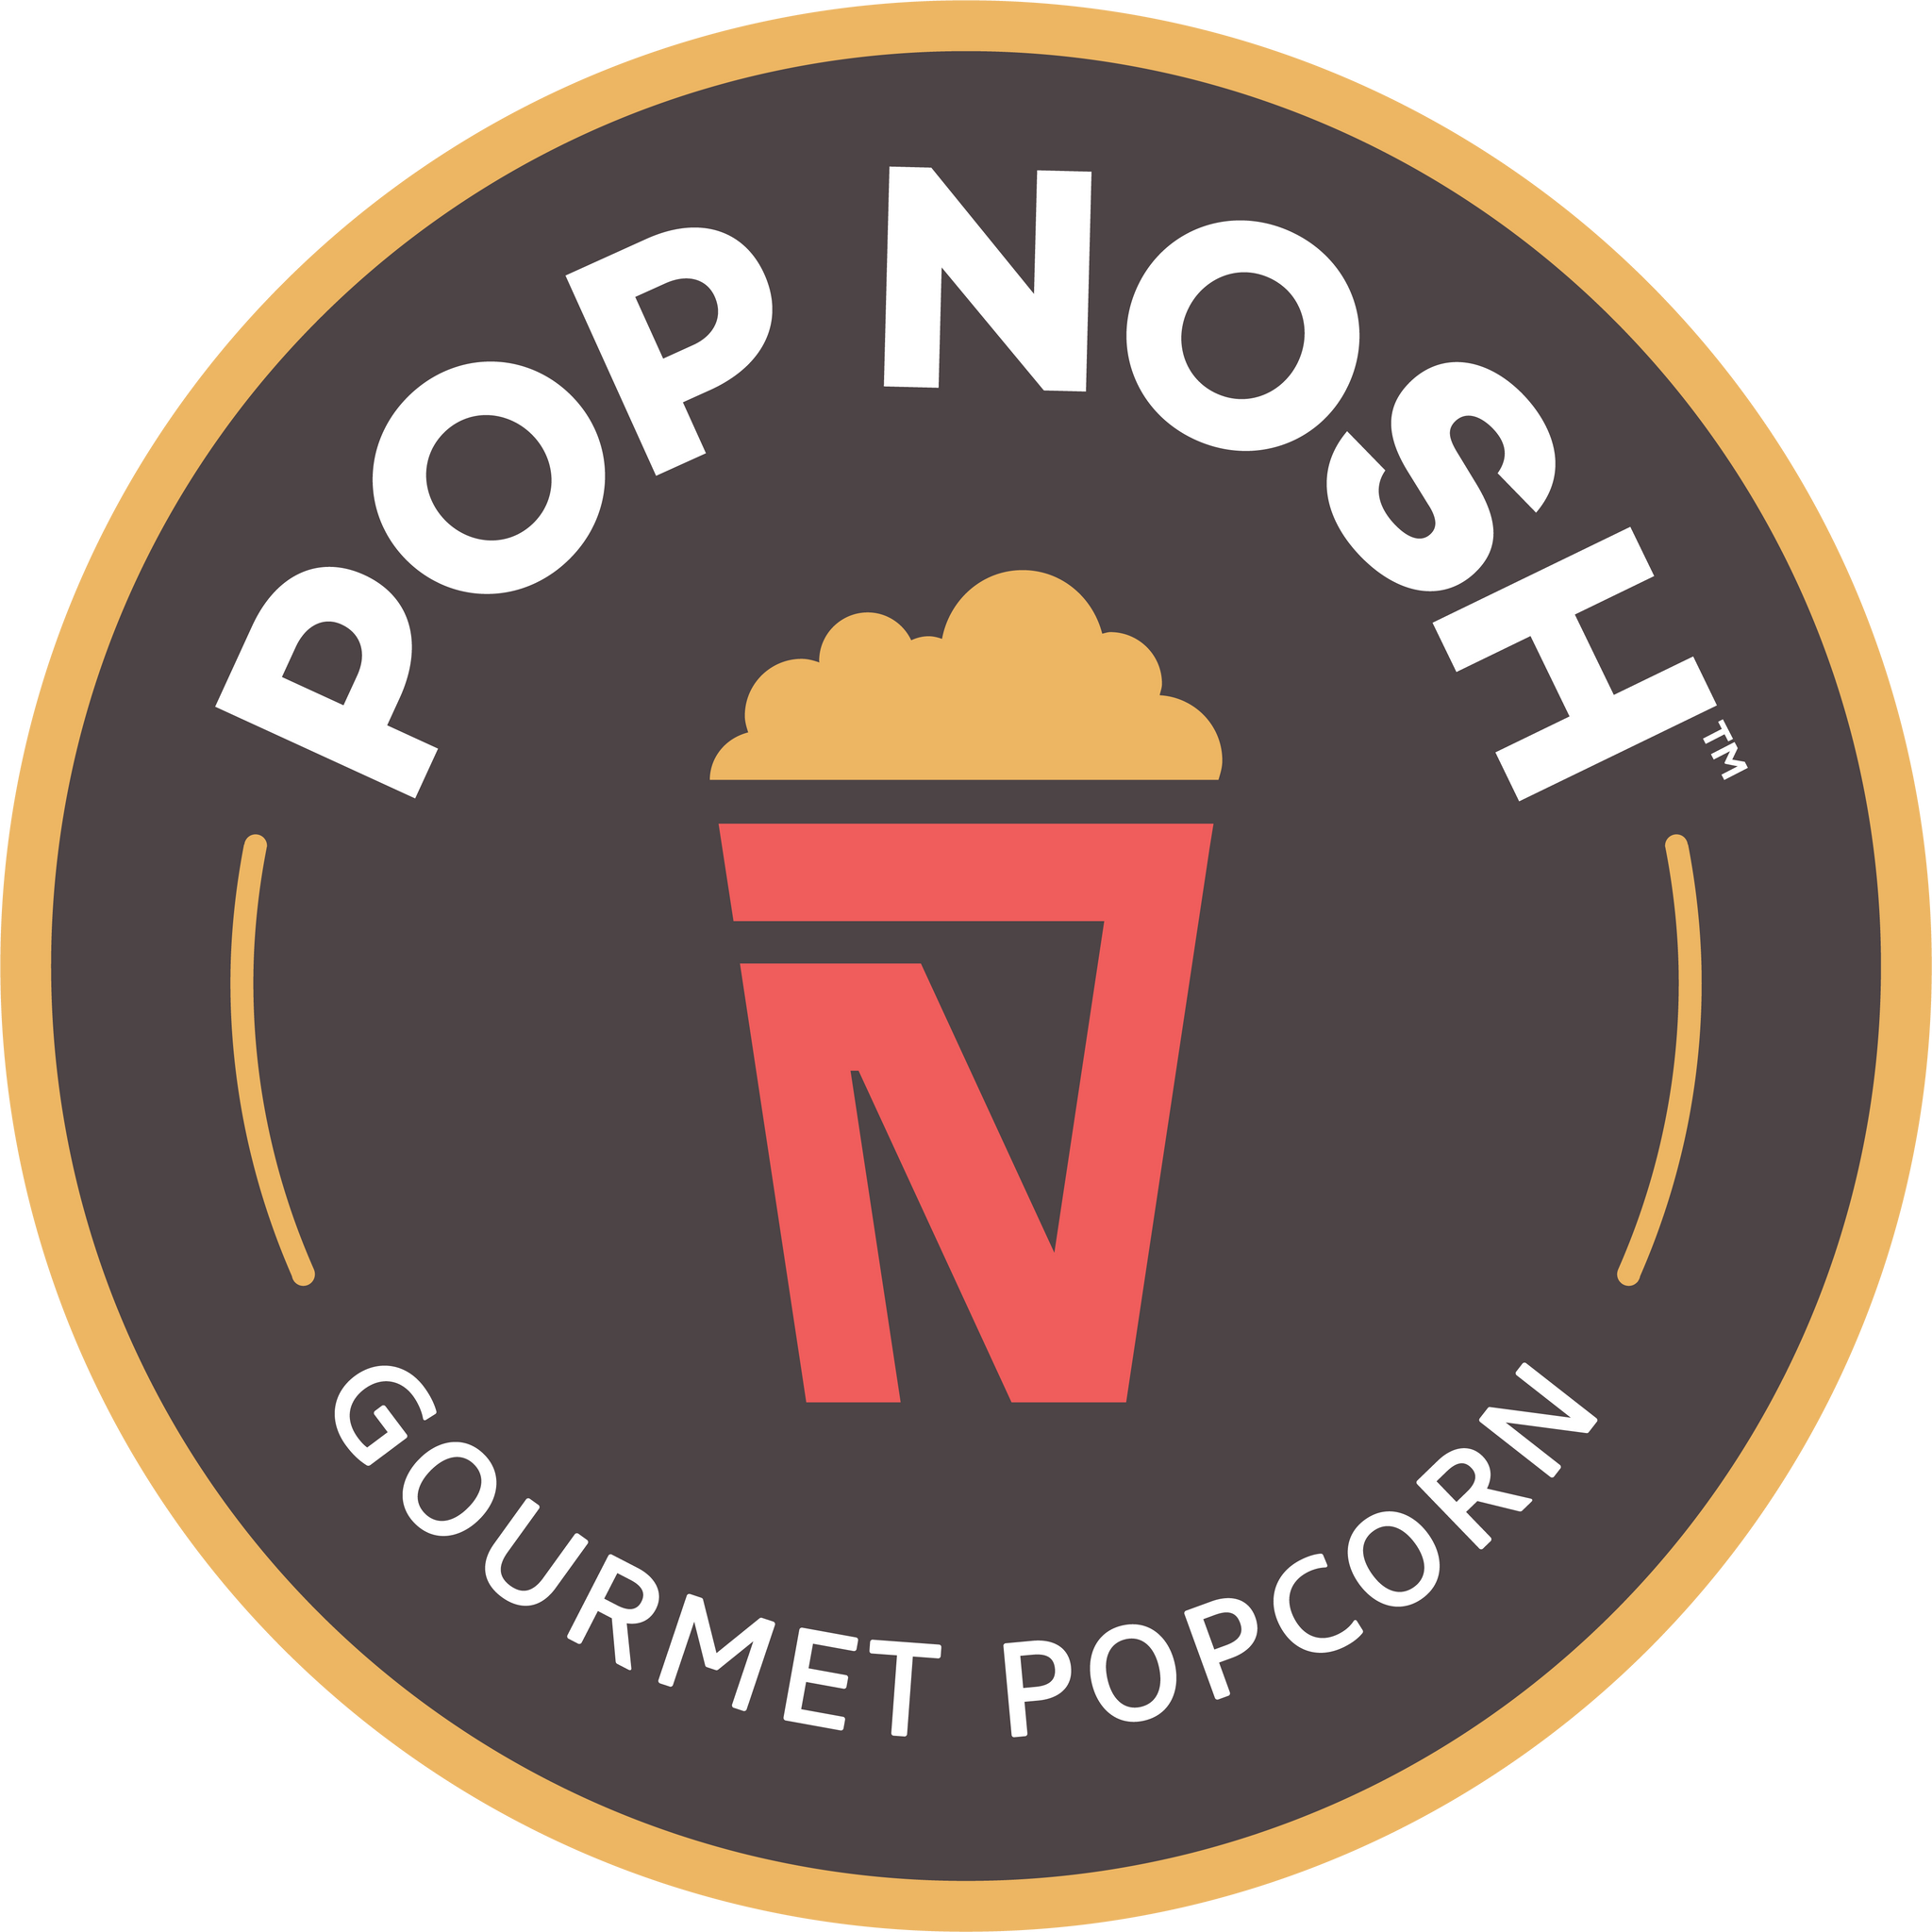 Healthy Snacking | Pop Nosh